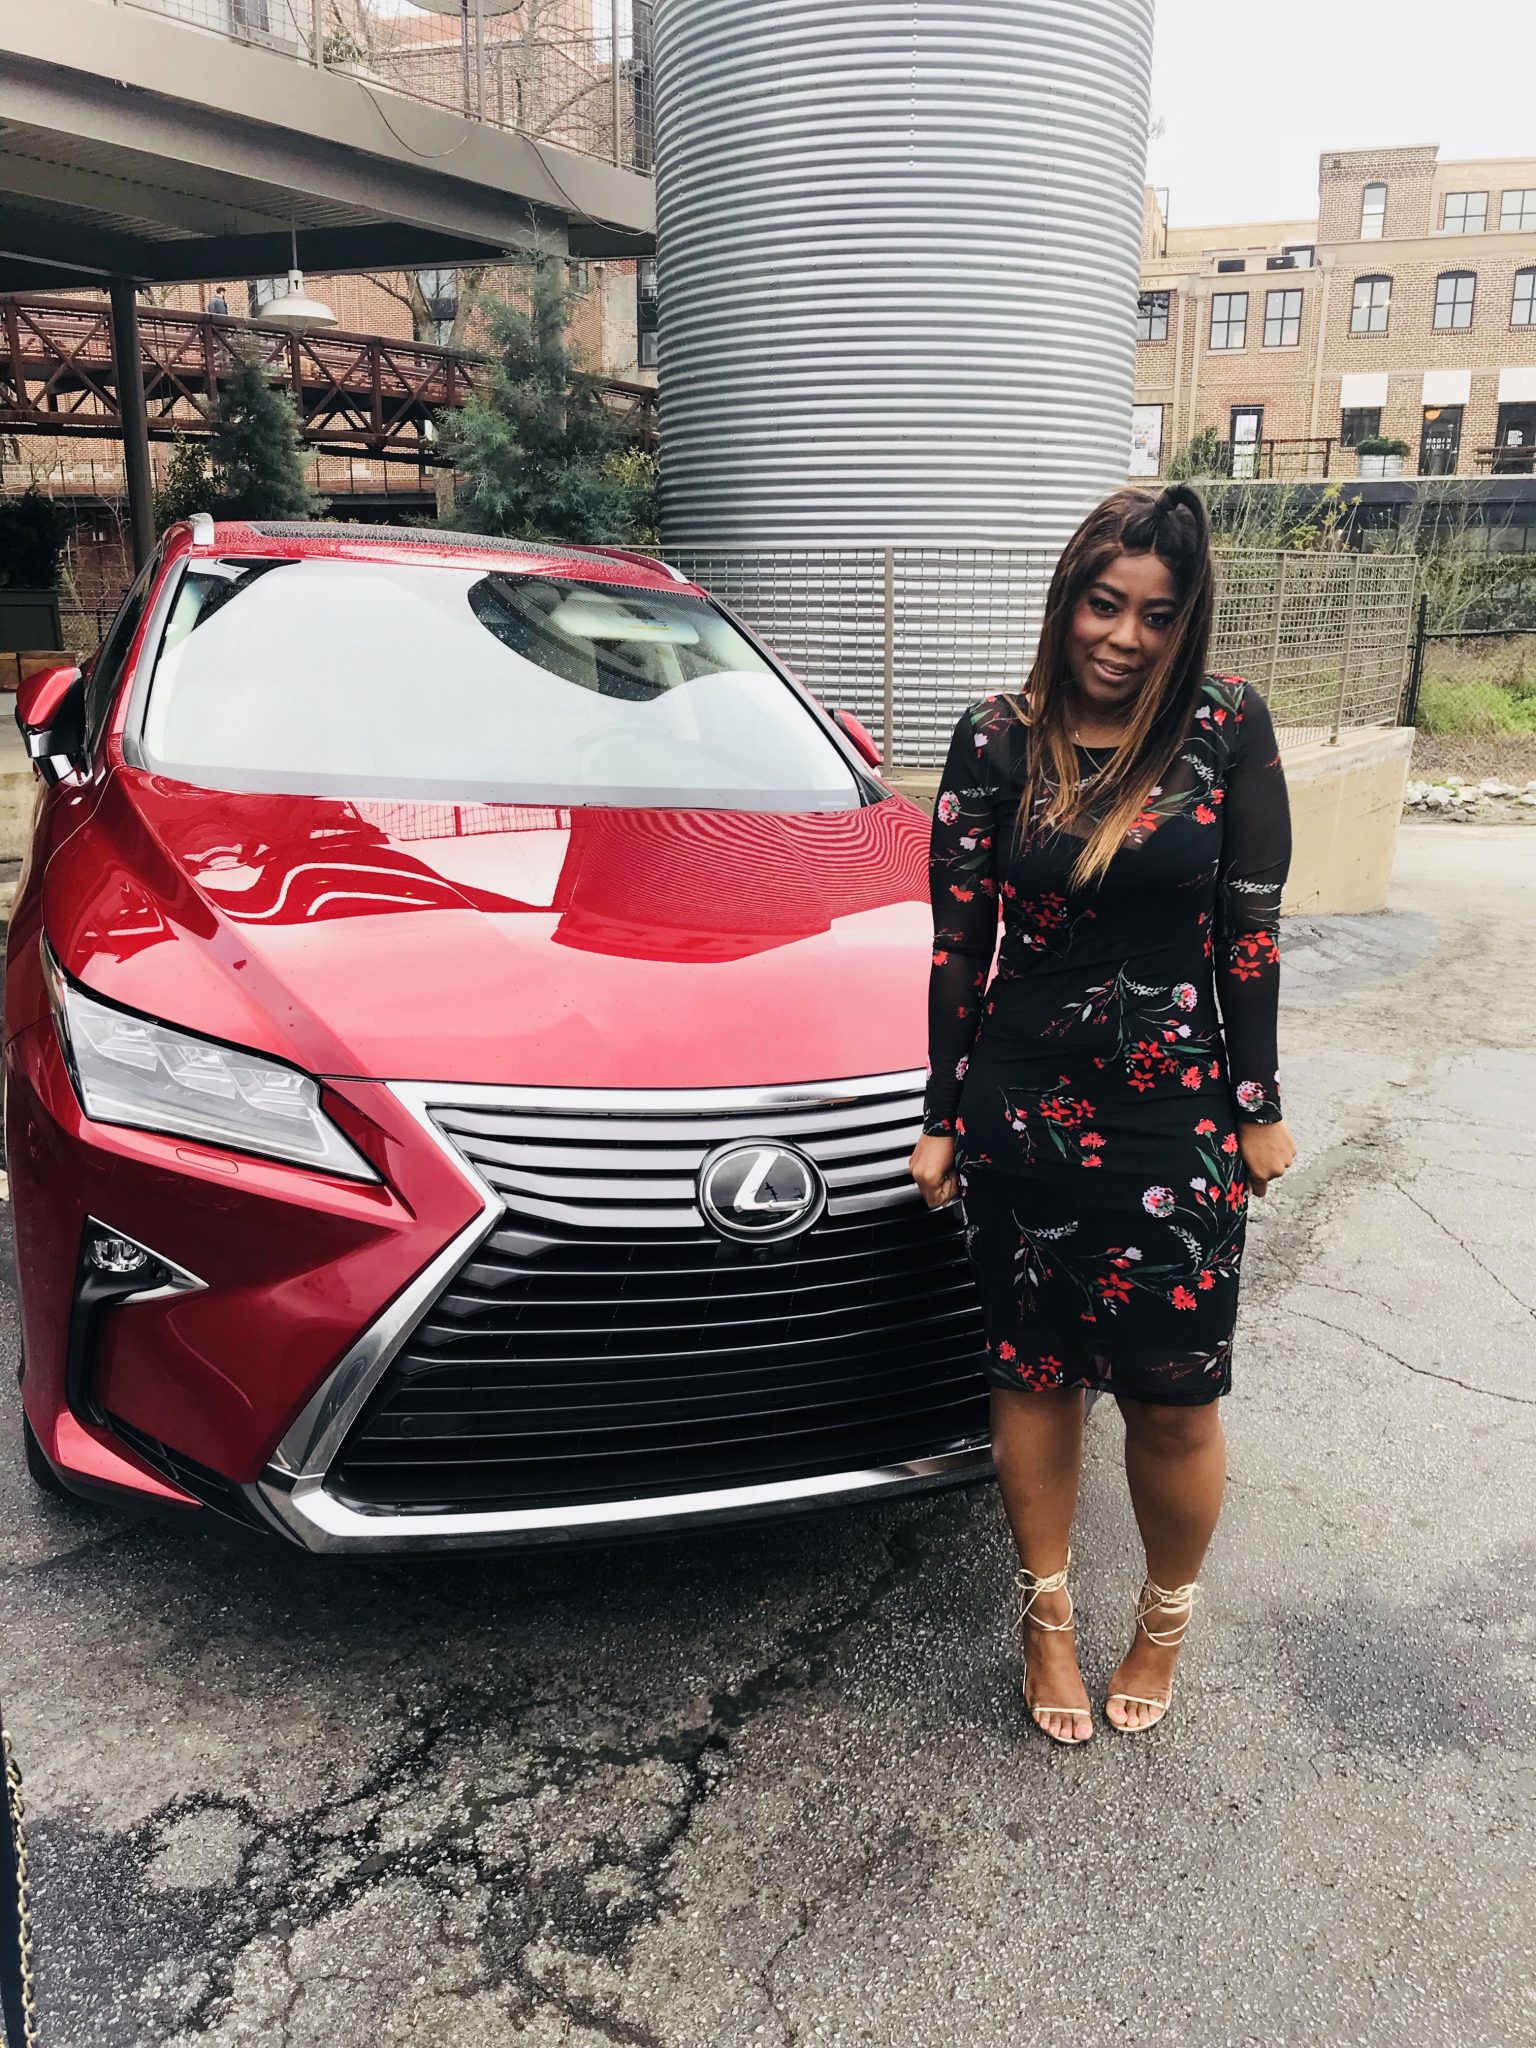 Lexus Celebrates The 2018 Auto Show In Atlanta